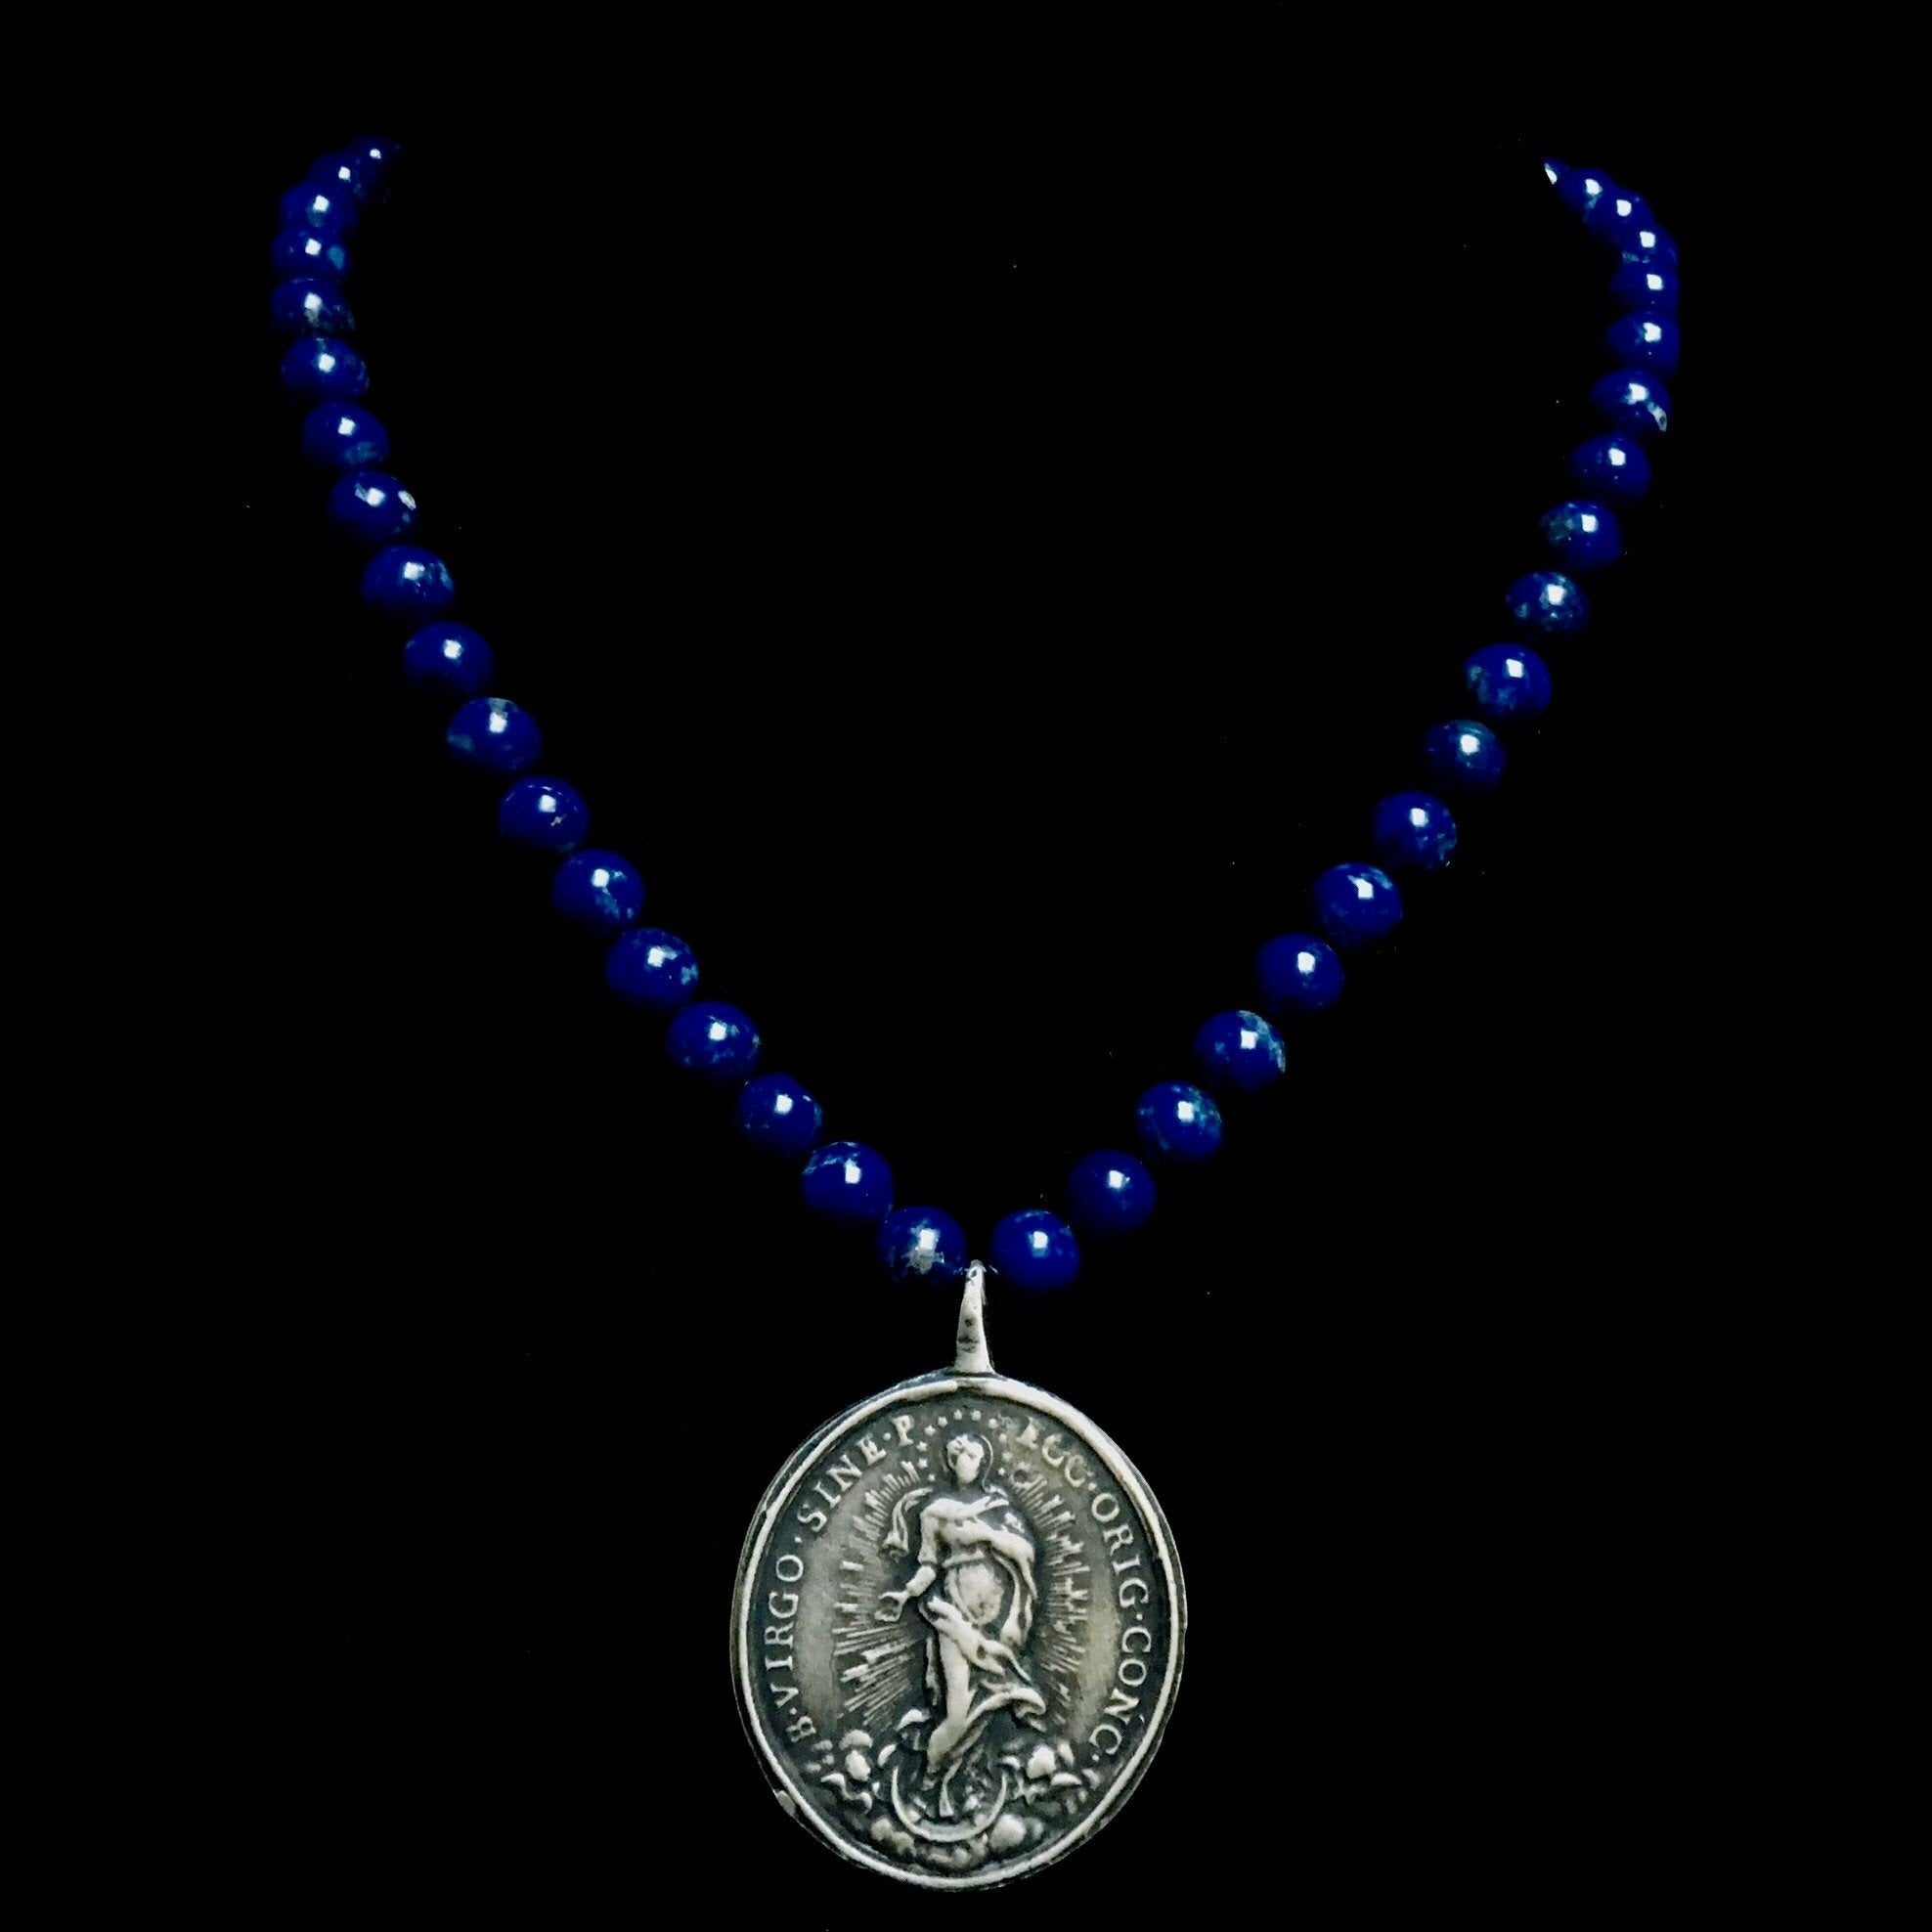 Virgo Rising Lapis Lazuli Necklace with the Madonna and Santa Barbara